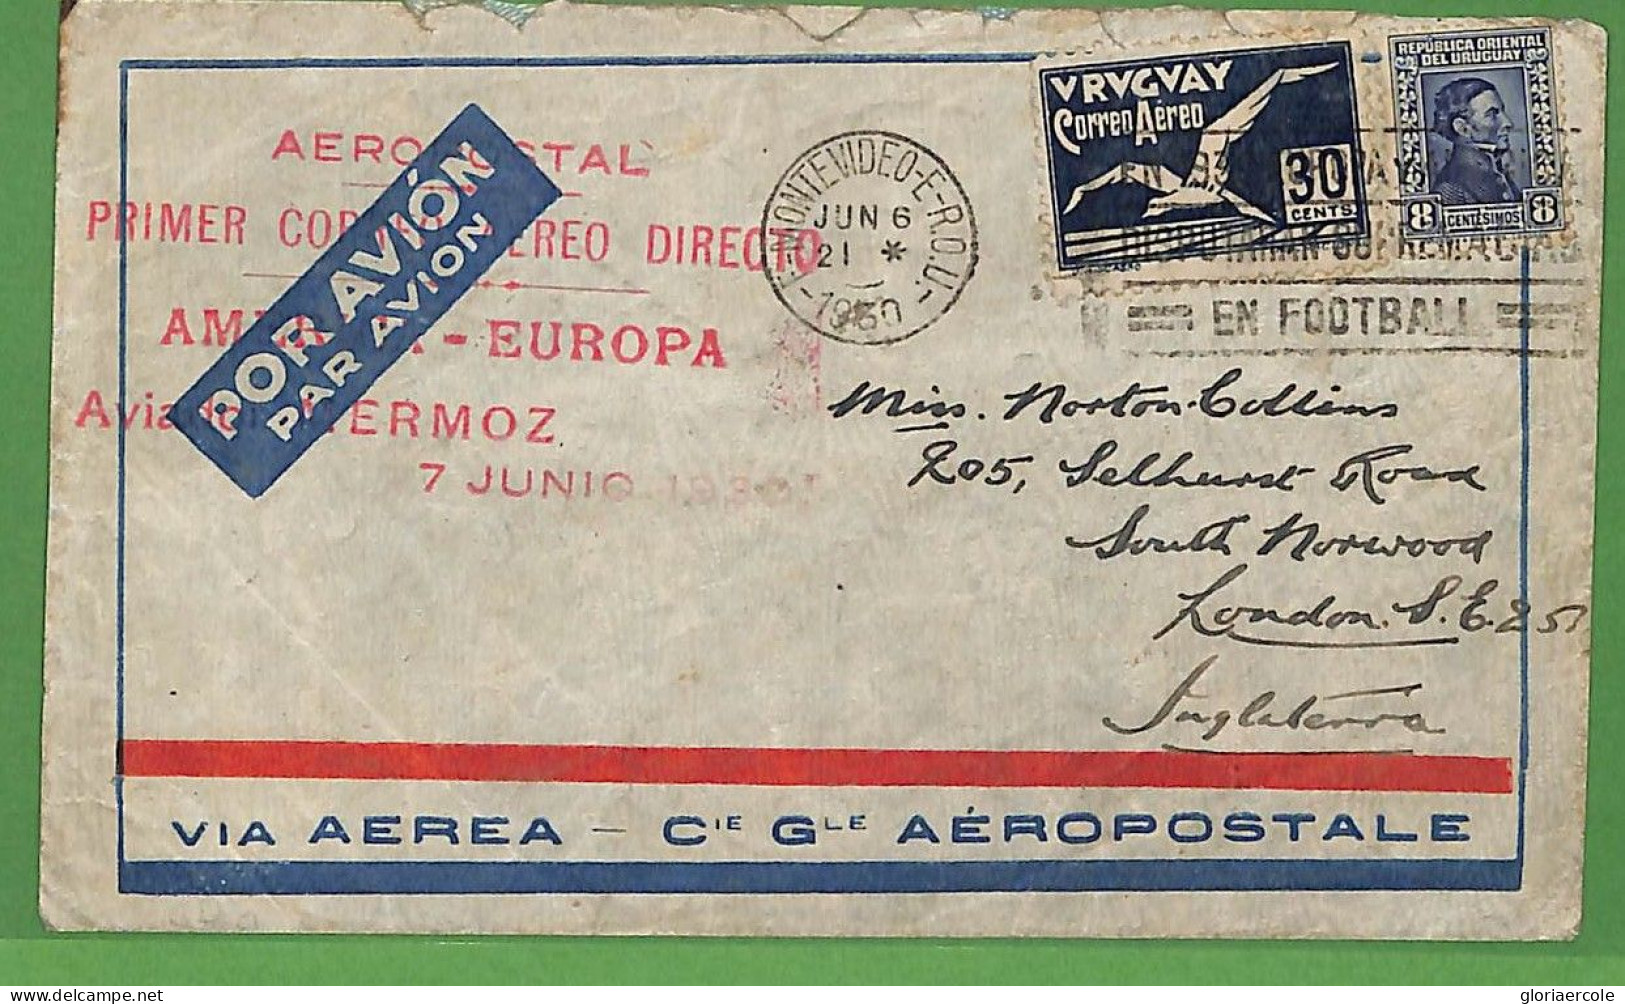 A1187 - URUGUAY  - POSTAL HISTORY - Rare MERMOZ Flight With FOOTBALL Postmark! - Neufs